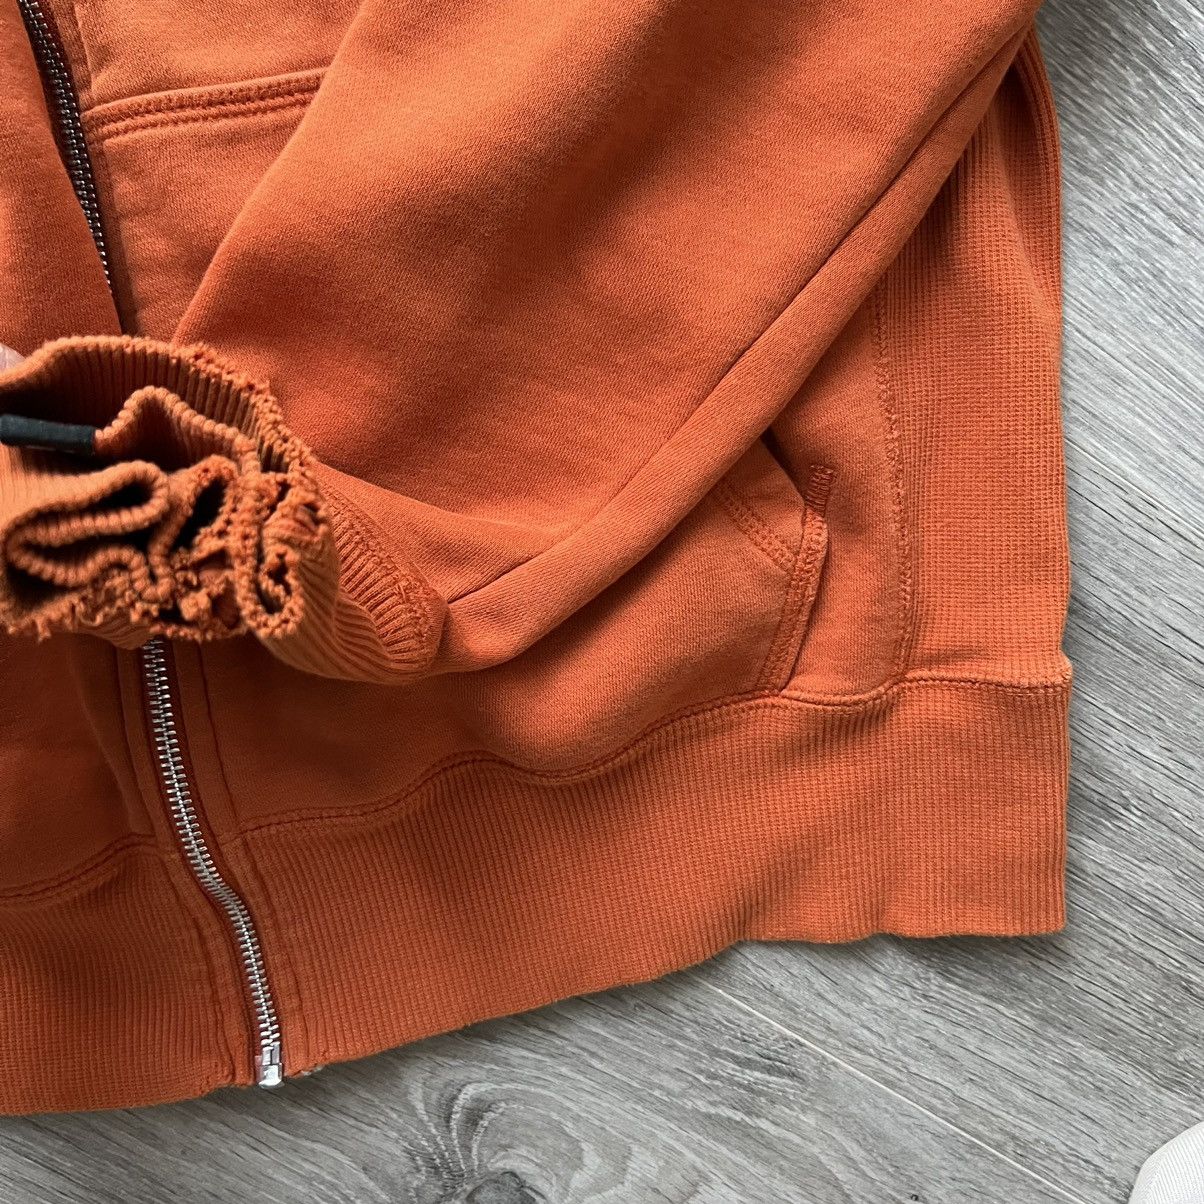 Nike Nike zip up hoodie orange Size US M / EU 48-50 / 2 - 6 Preview